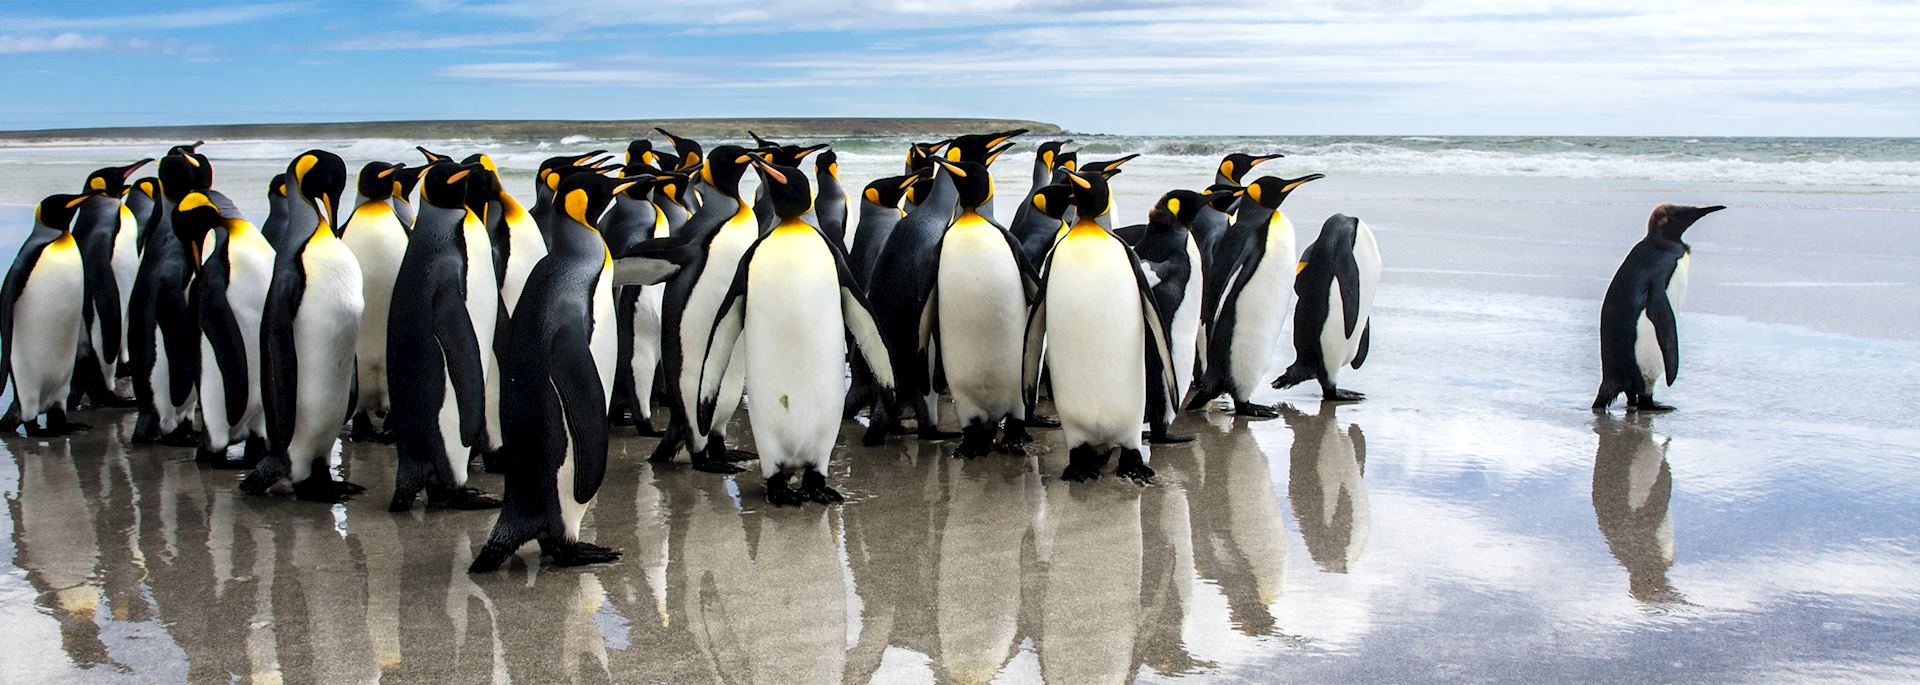 King penguins, Volunteer Point